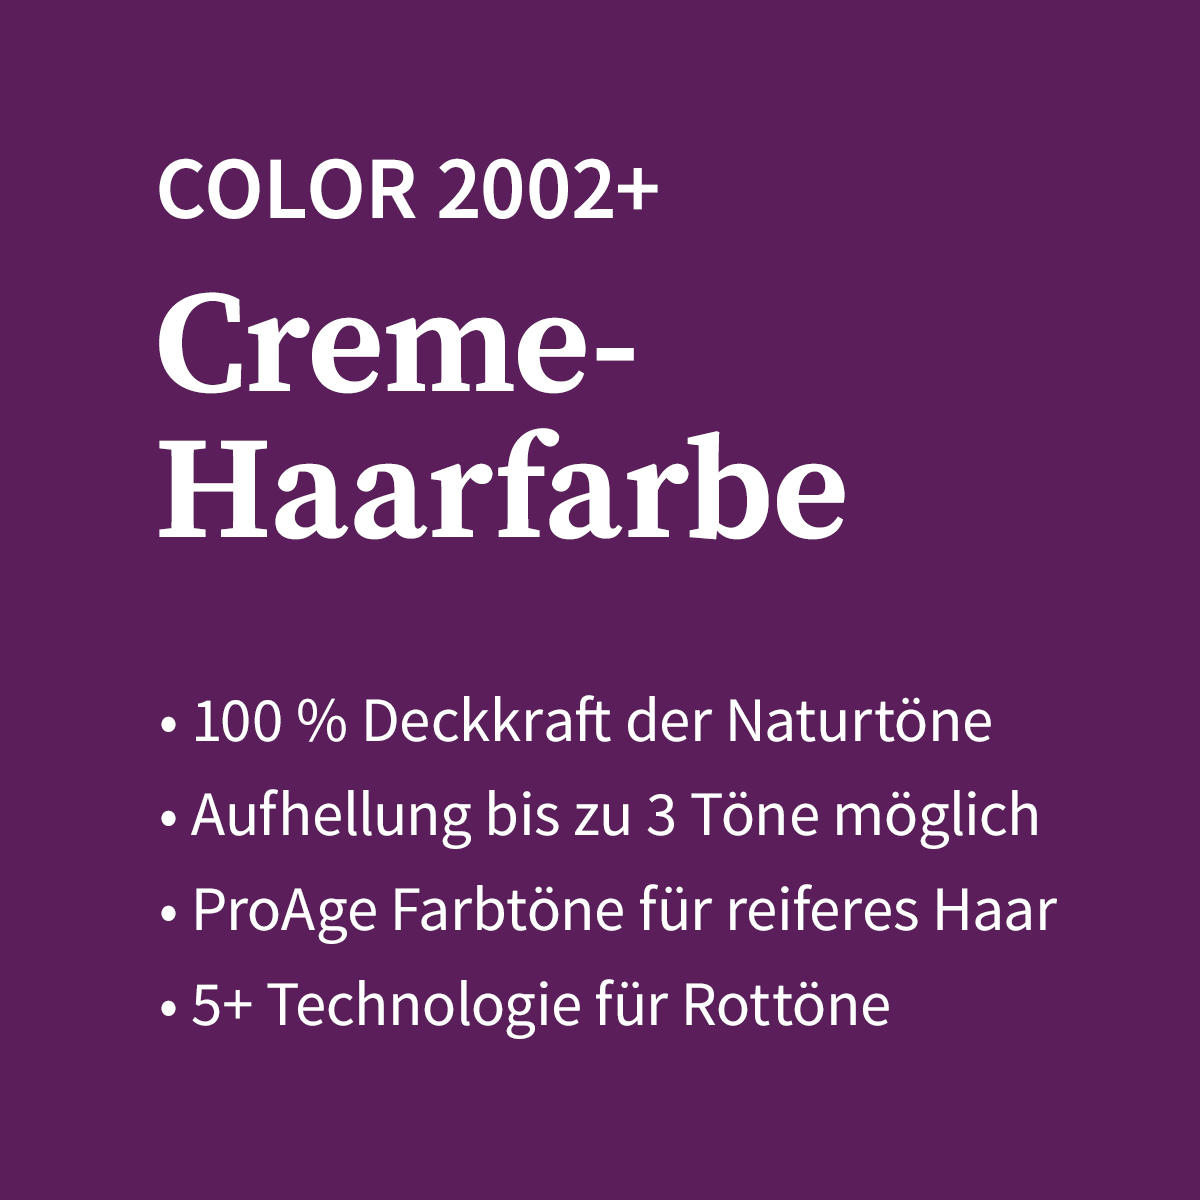 Basler Color 2002+ Cremehaarfarbe 4/2 mittelbraun matt, Tube 60 ml - 4